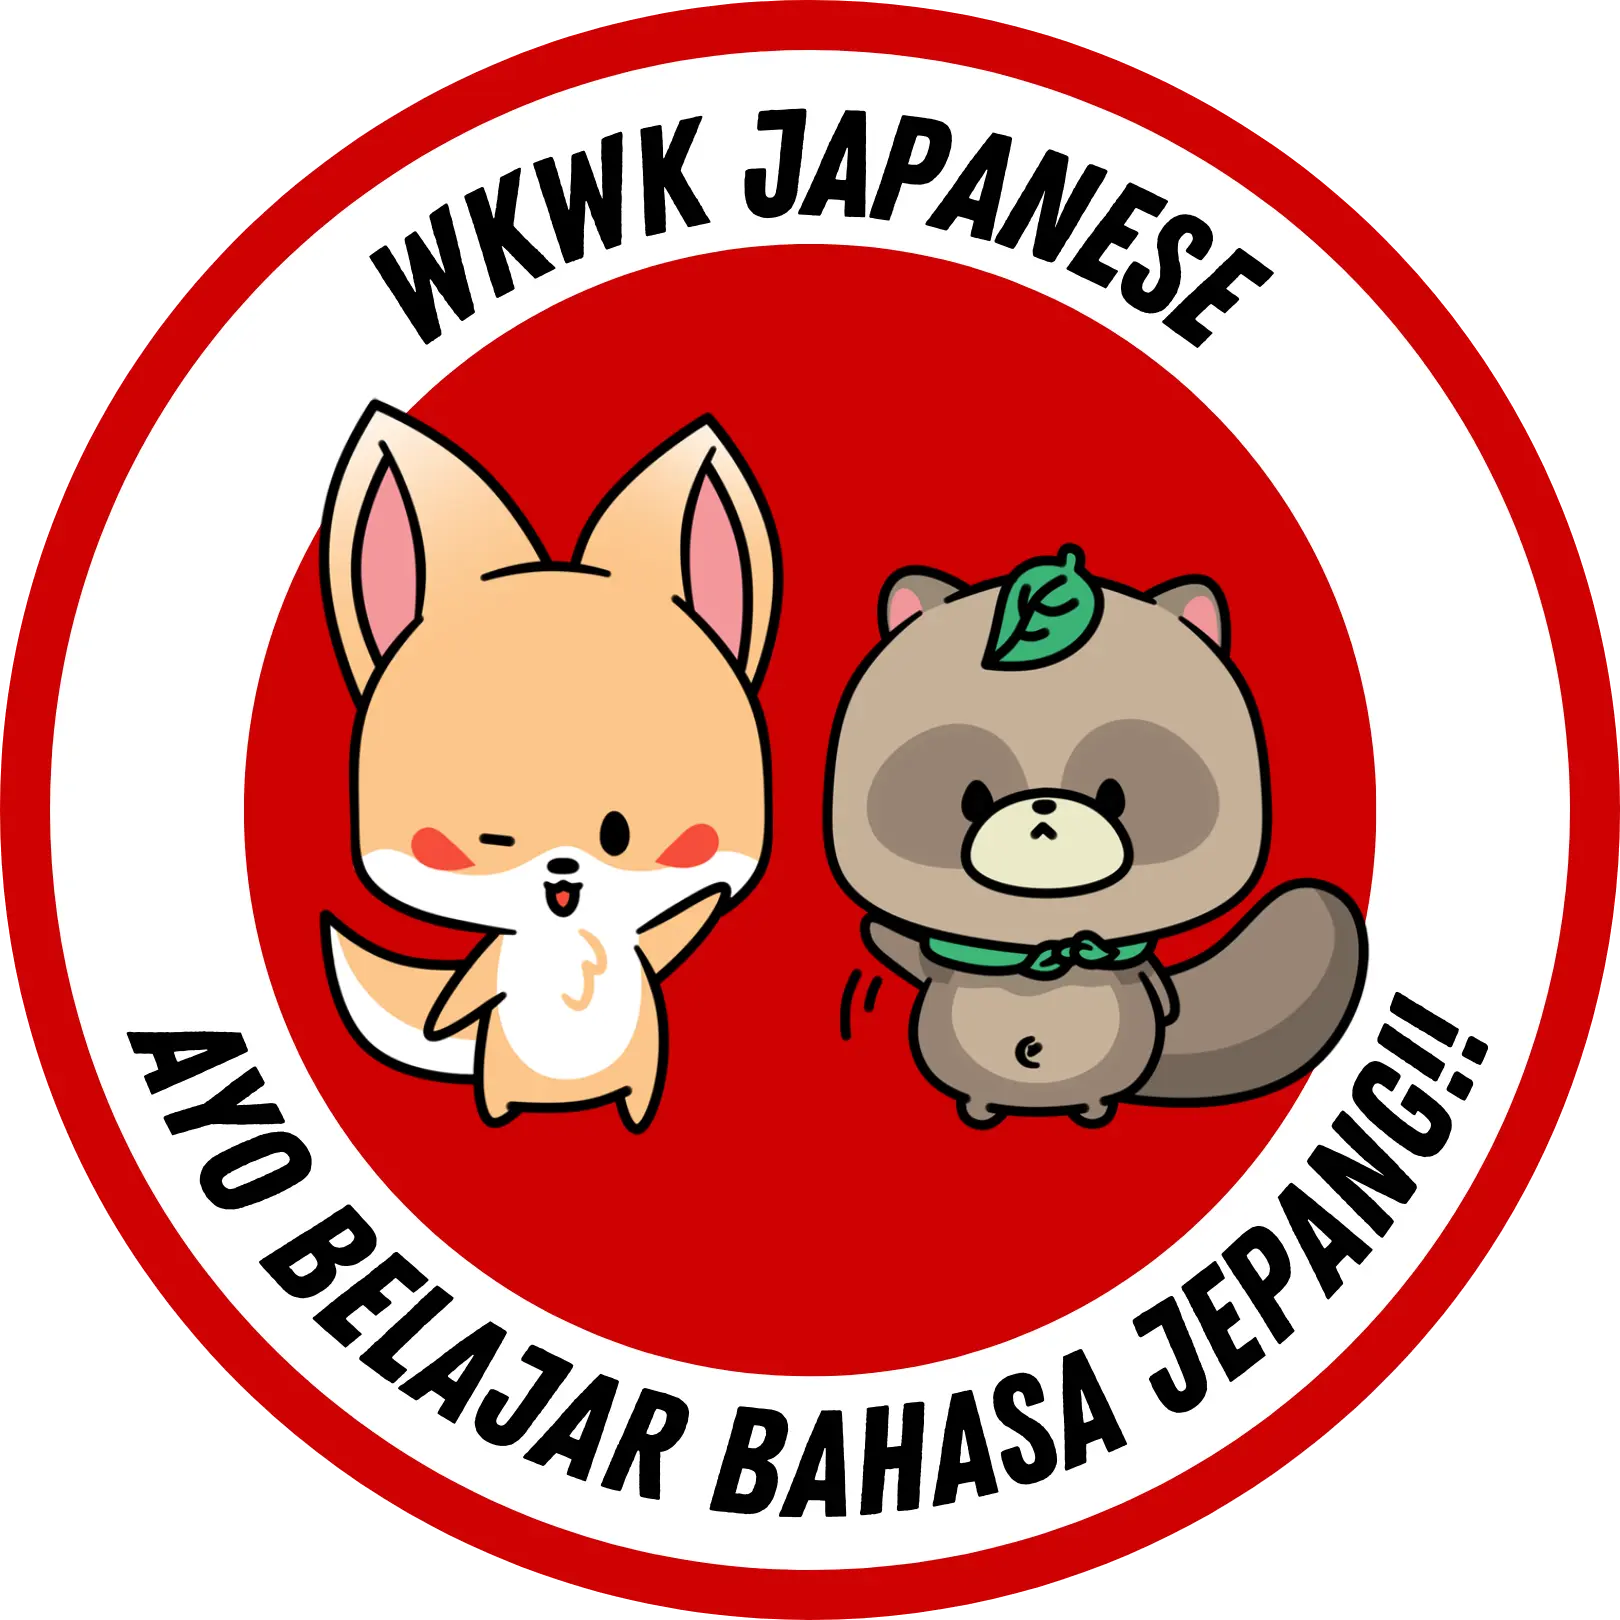 WKWK JAPANESE